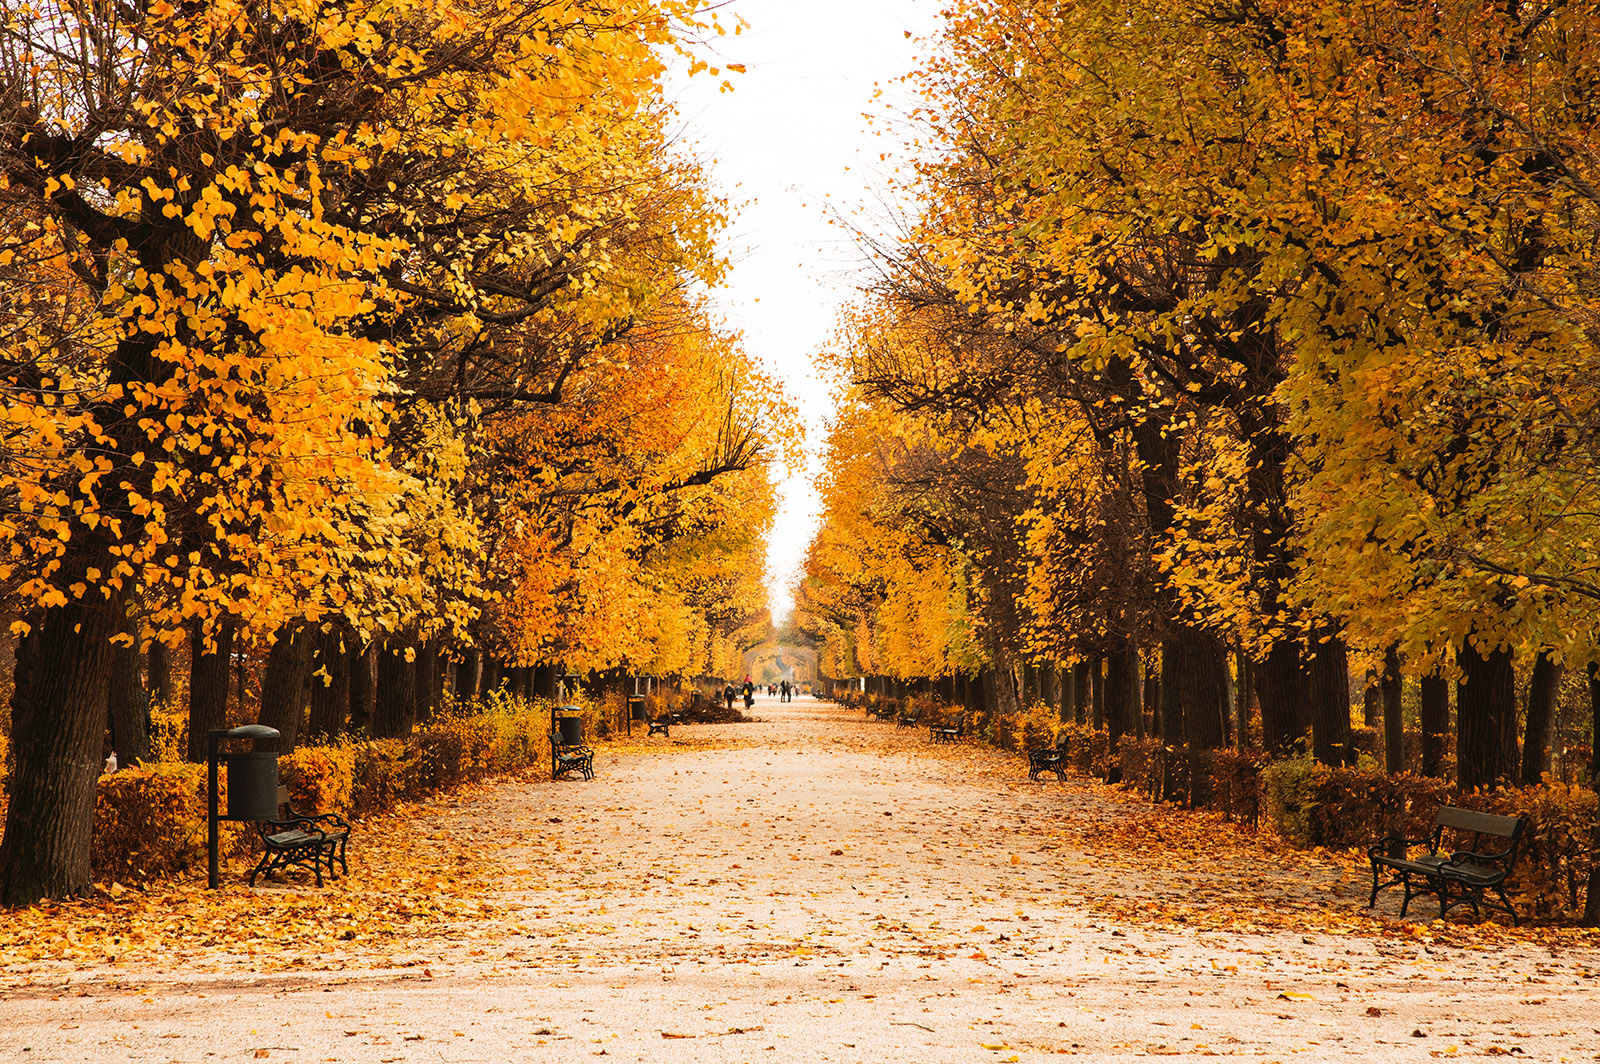 autumn leaves in a park in vienna, austria